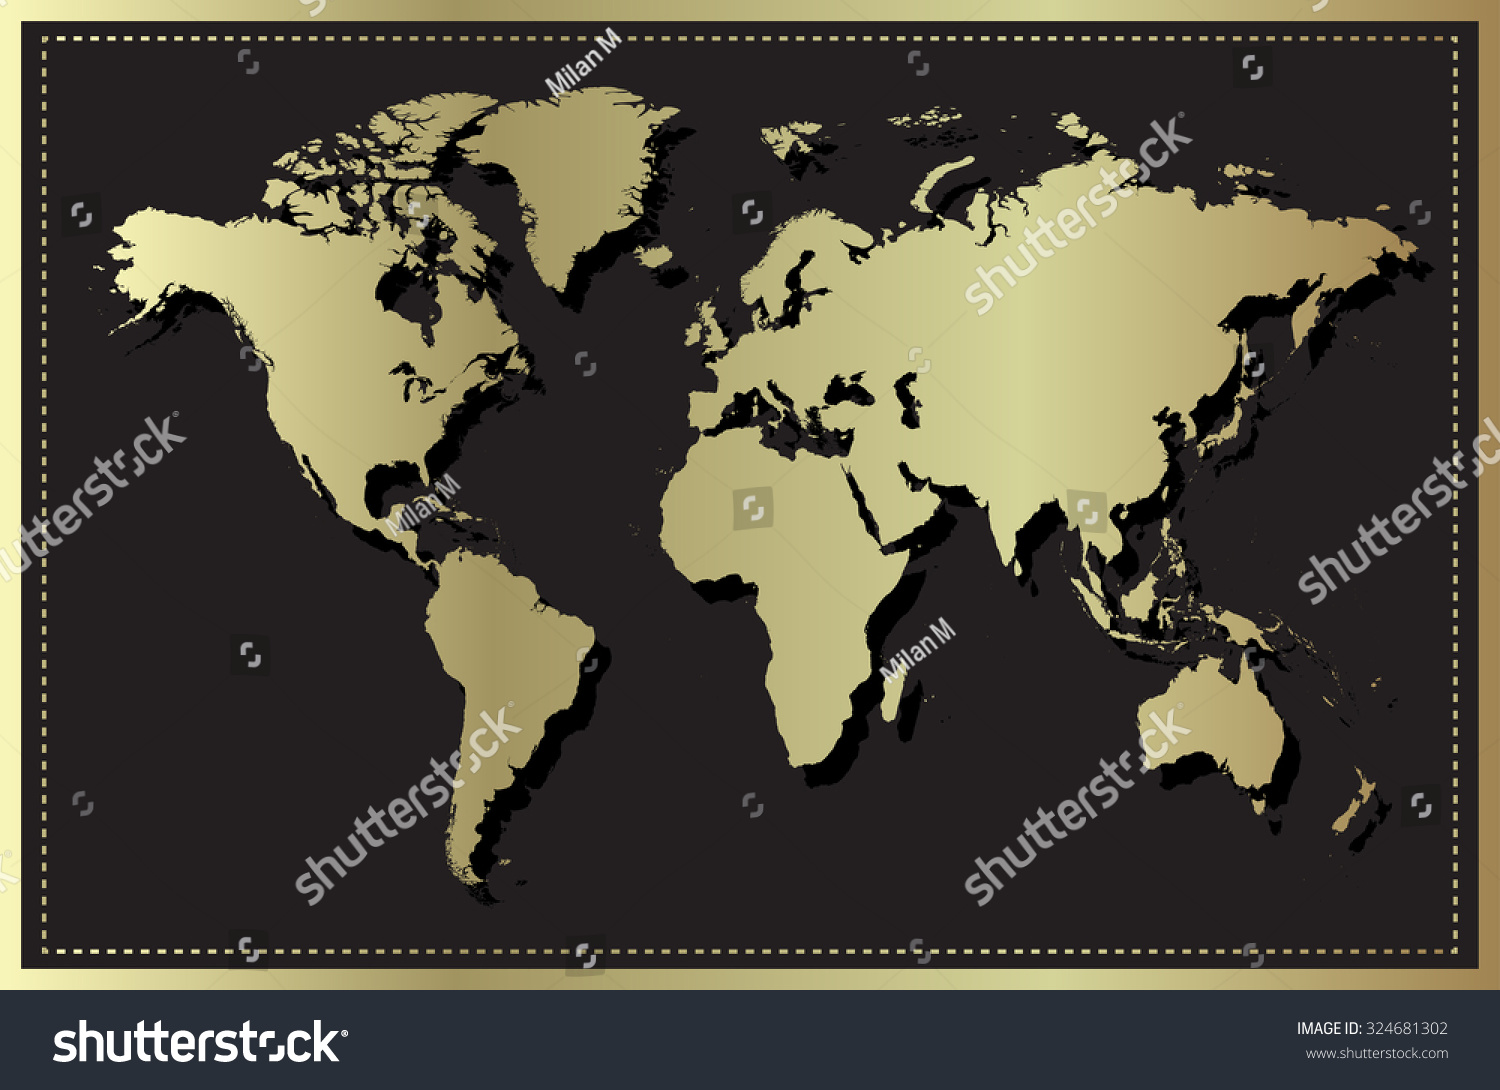 Metallic World Mapvector Illustration Stock Vector Royalty Free 324681302 Shutterstock 